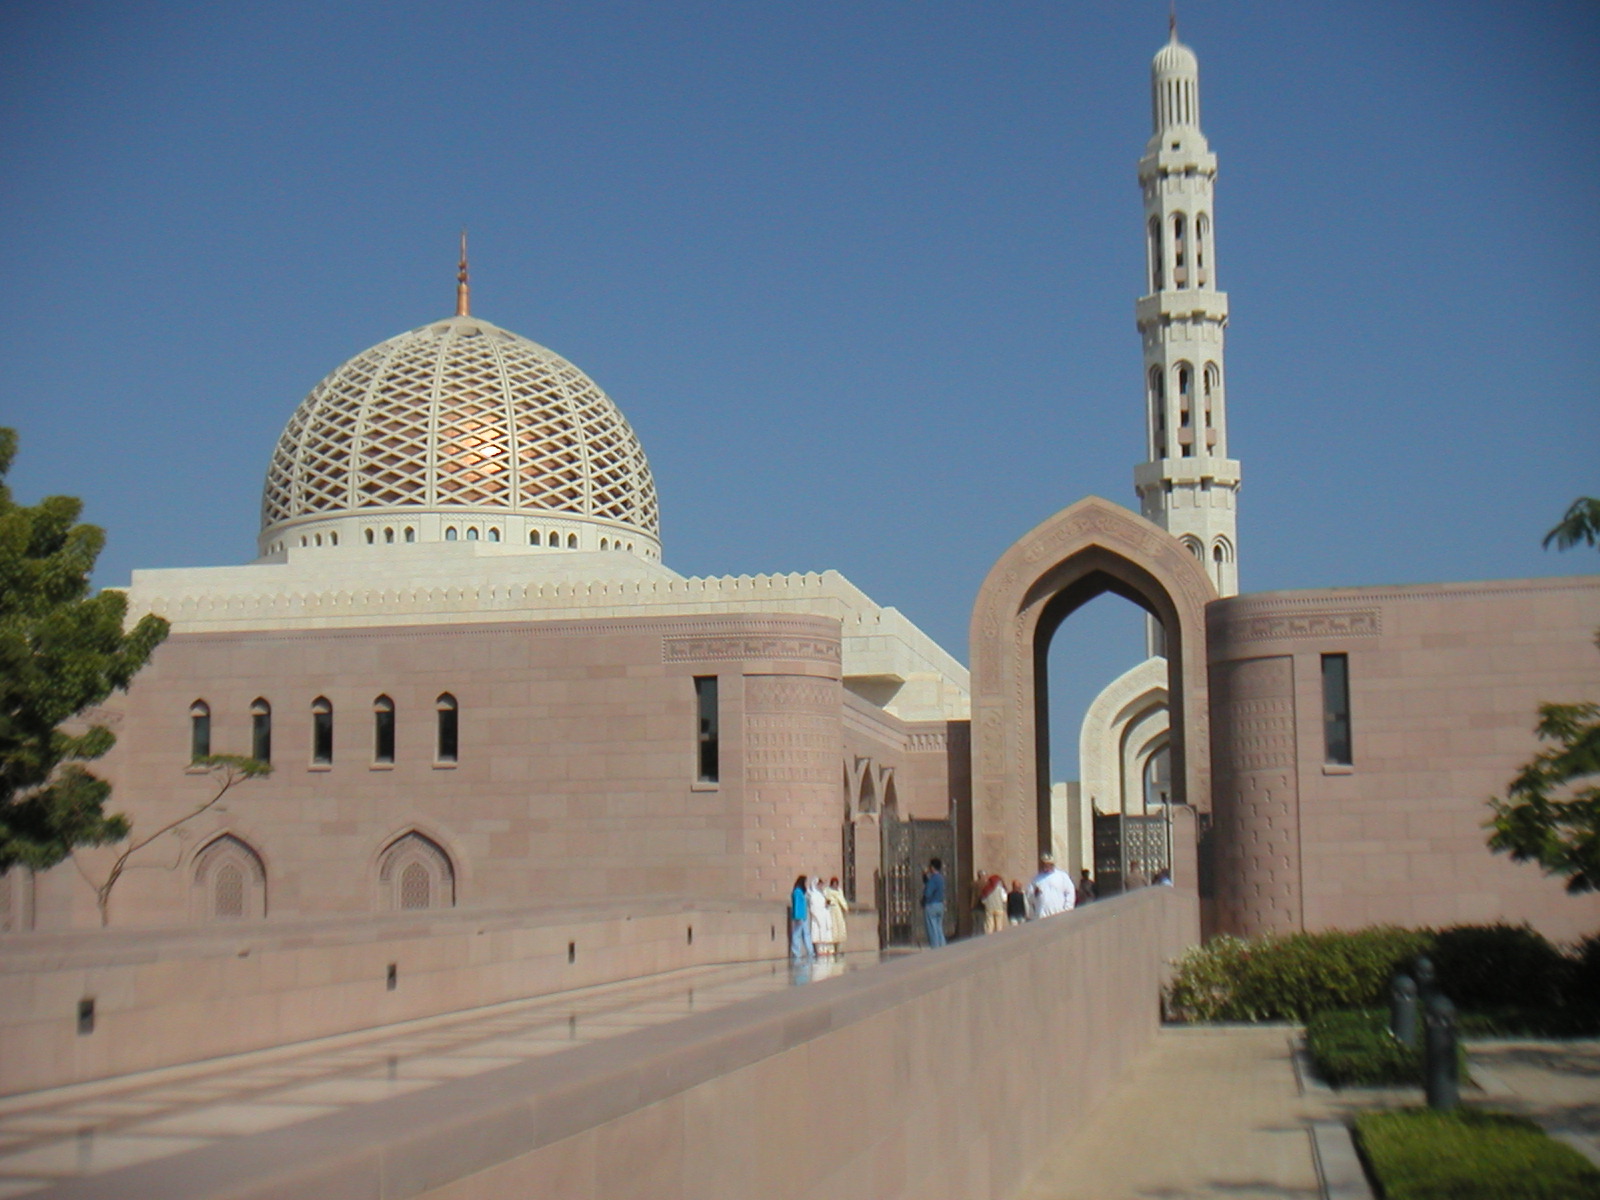 A Sultan Qaboos Ground Mosque (Oman)